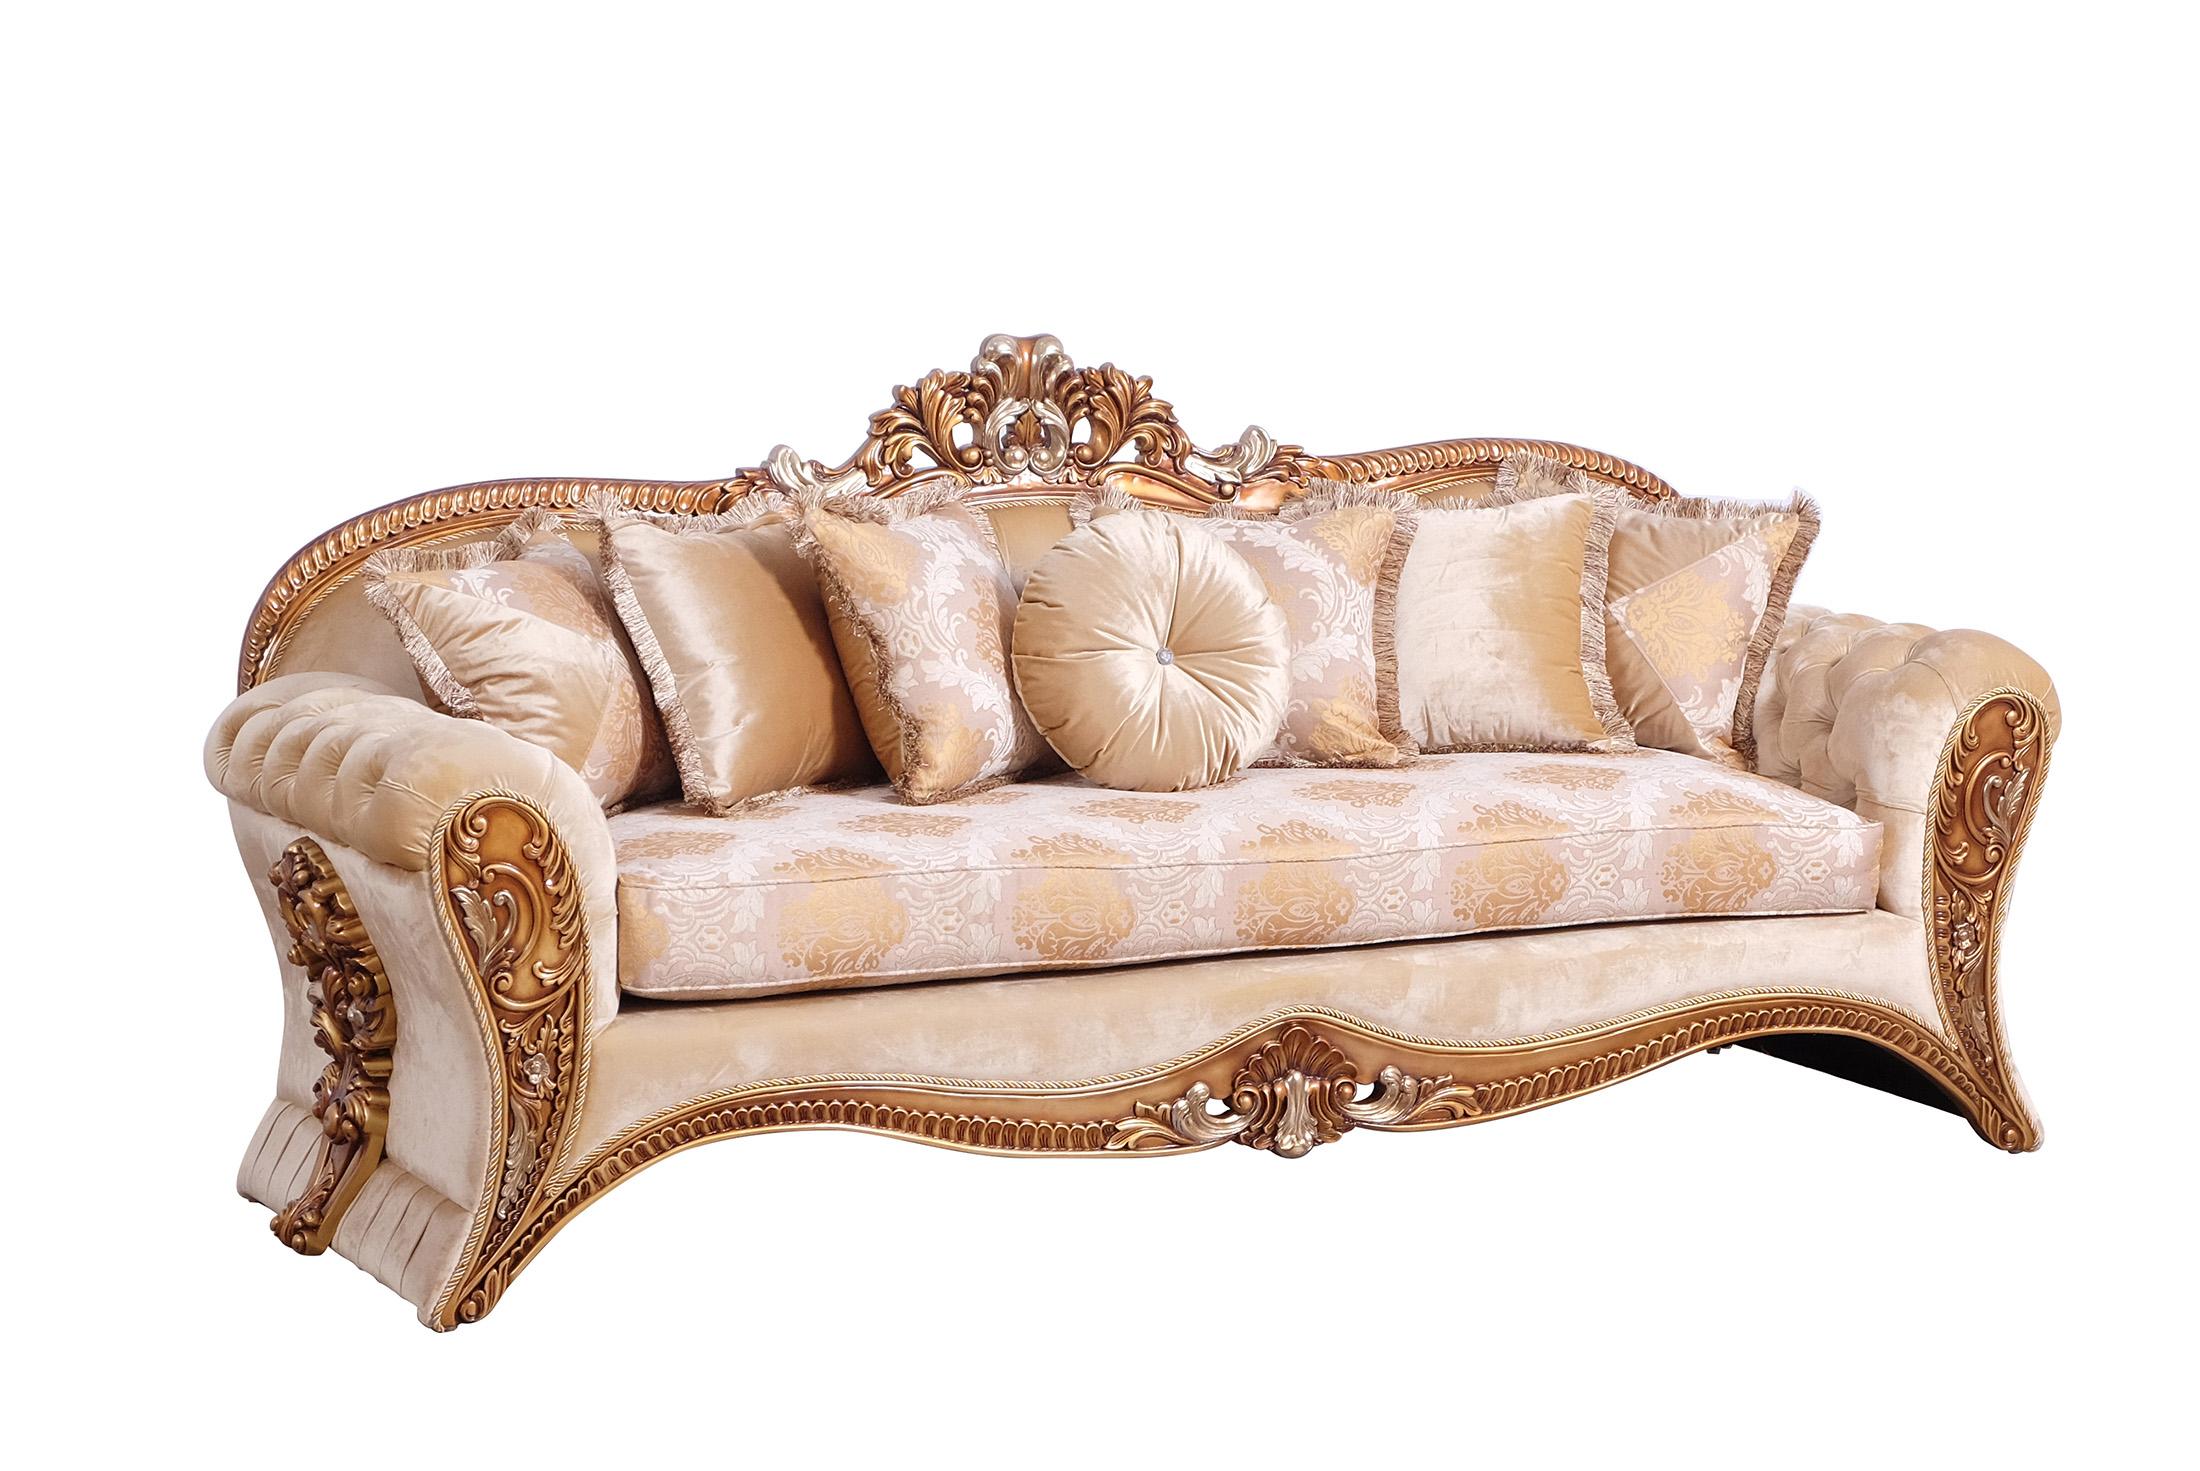 Classic, Traditional Sofa EMPERADOR II 42038-S in Gold, Beige Fabric